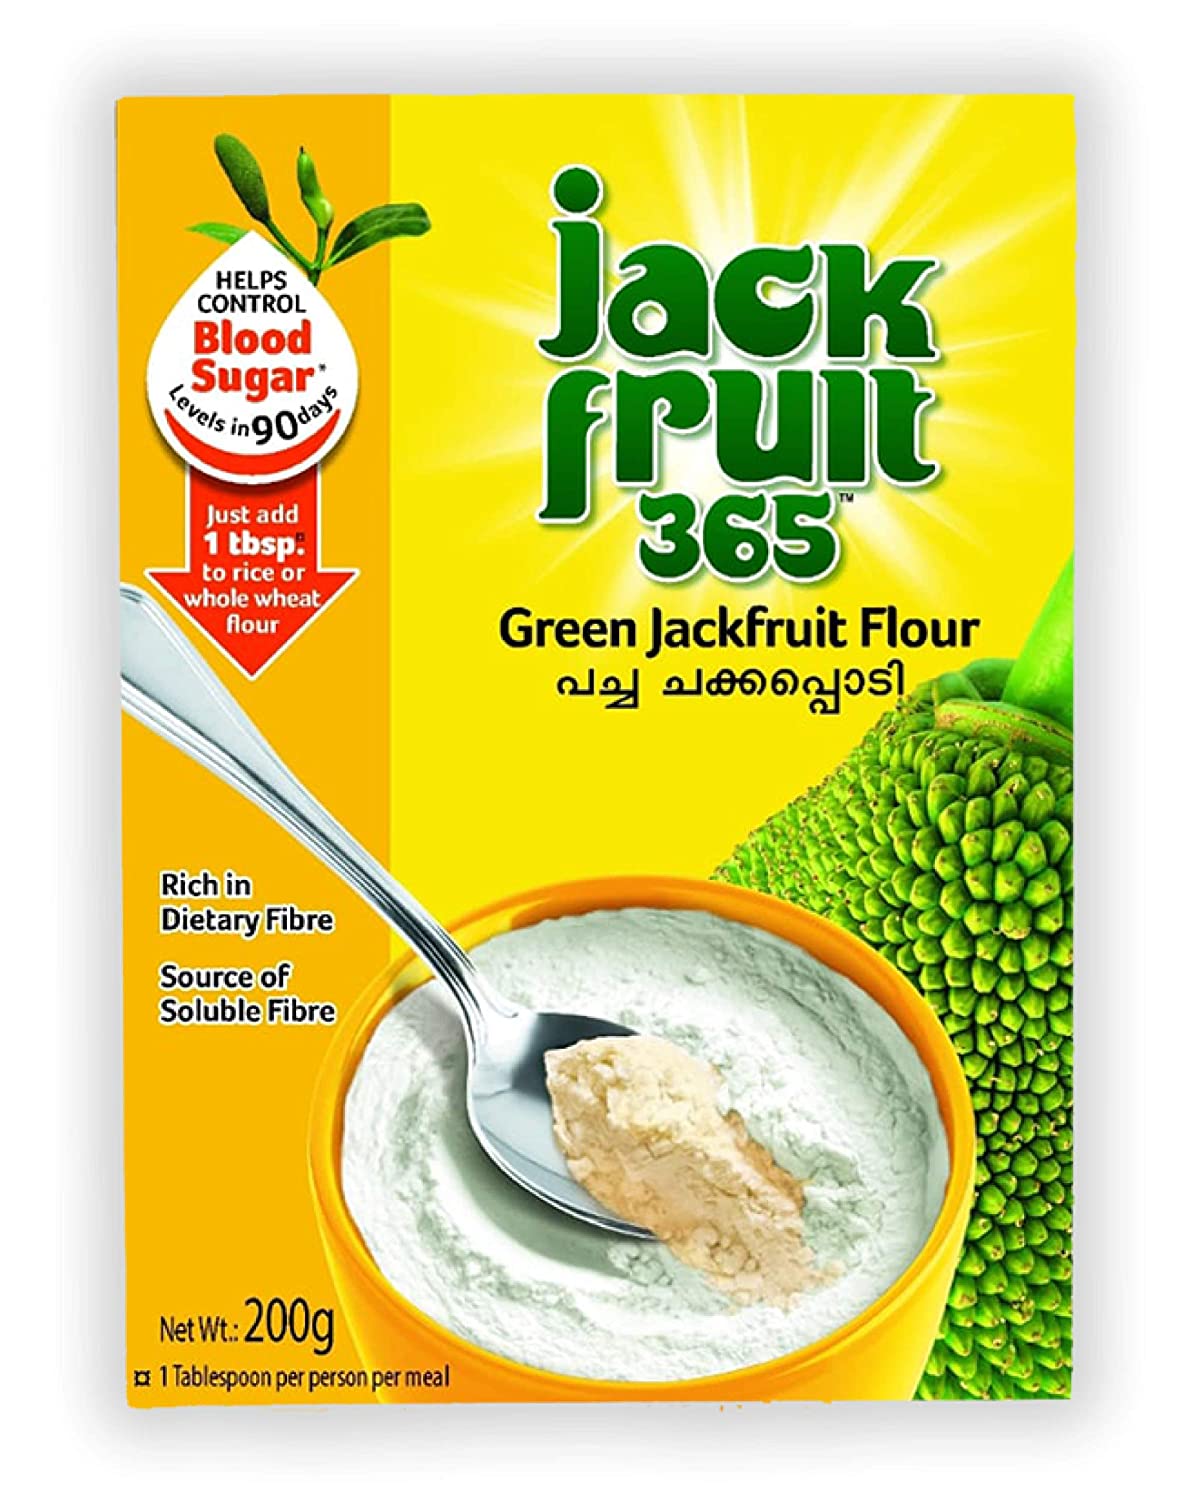 JACK FRUIT 365 (GREEN JACKFRUIT FLOUR)